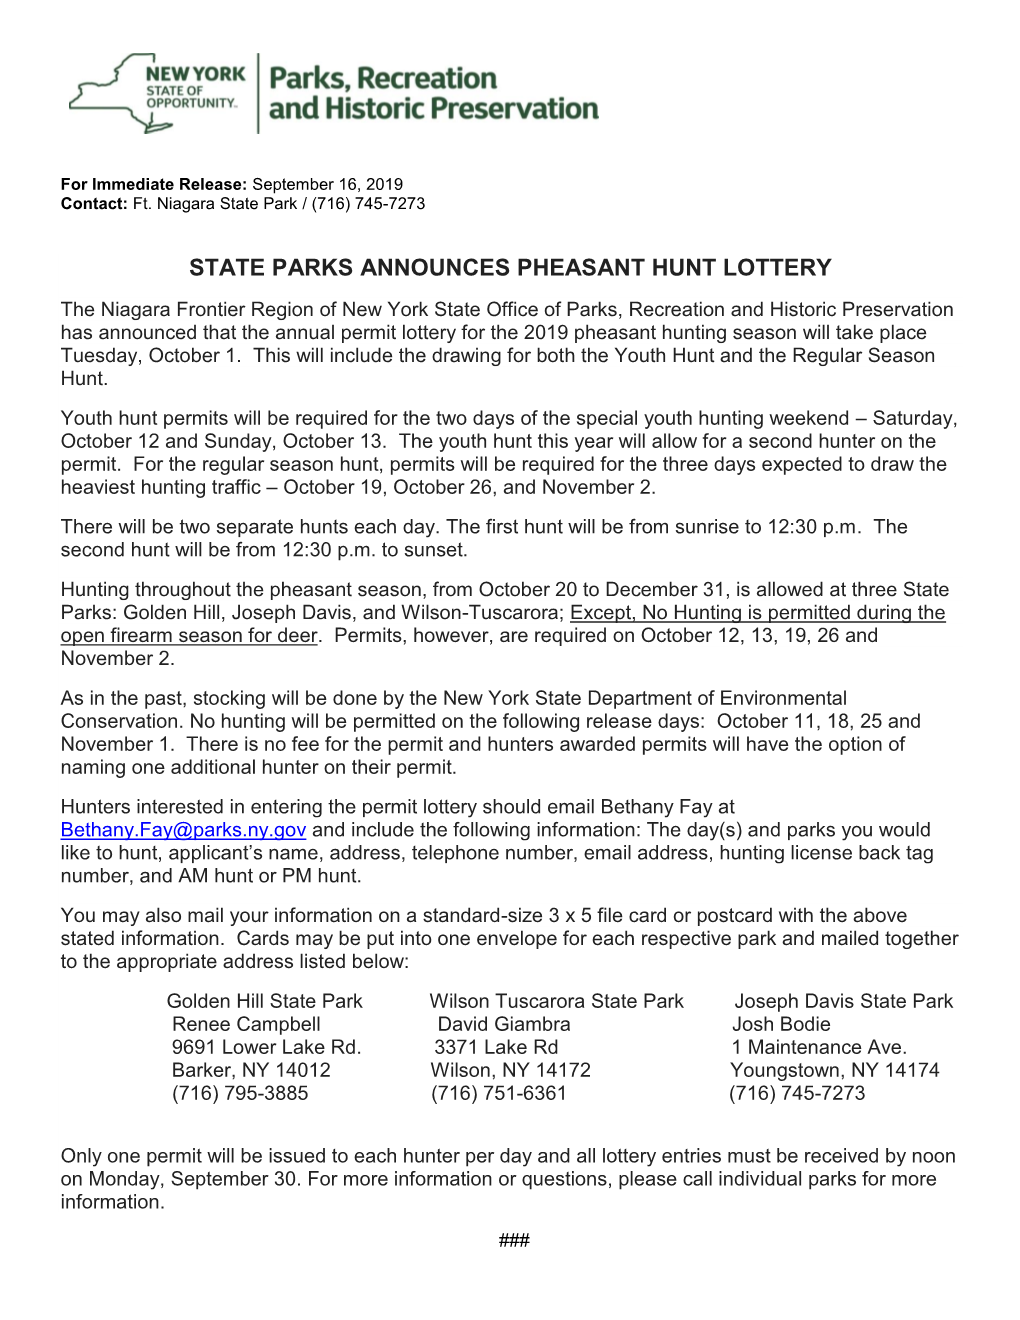 Niagara Pheasant Hunting Lottery